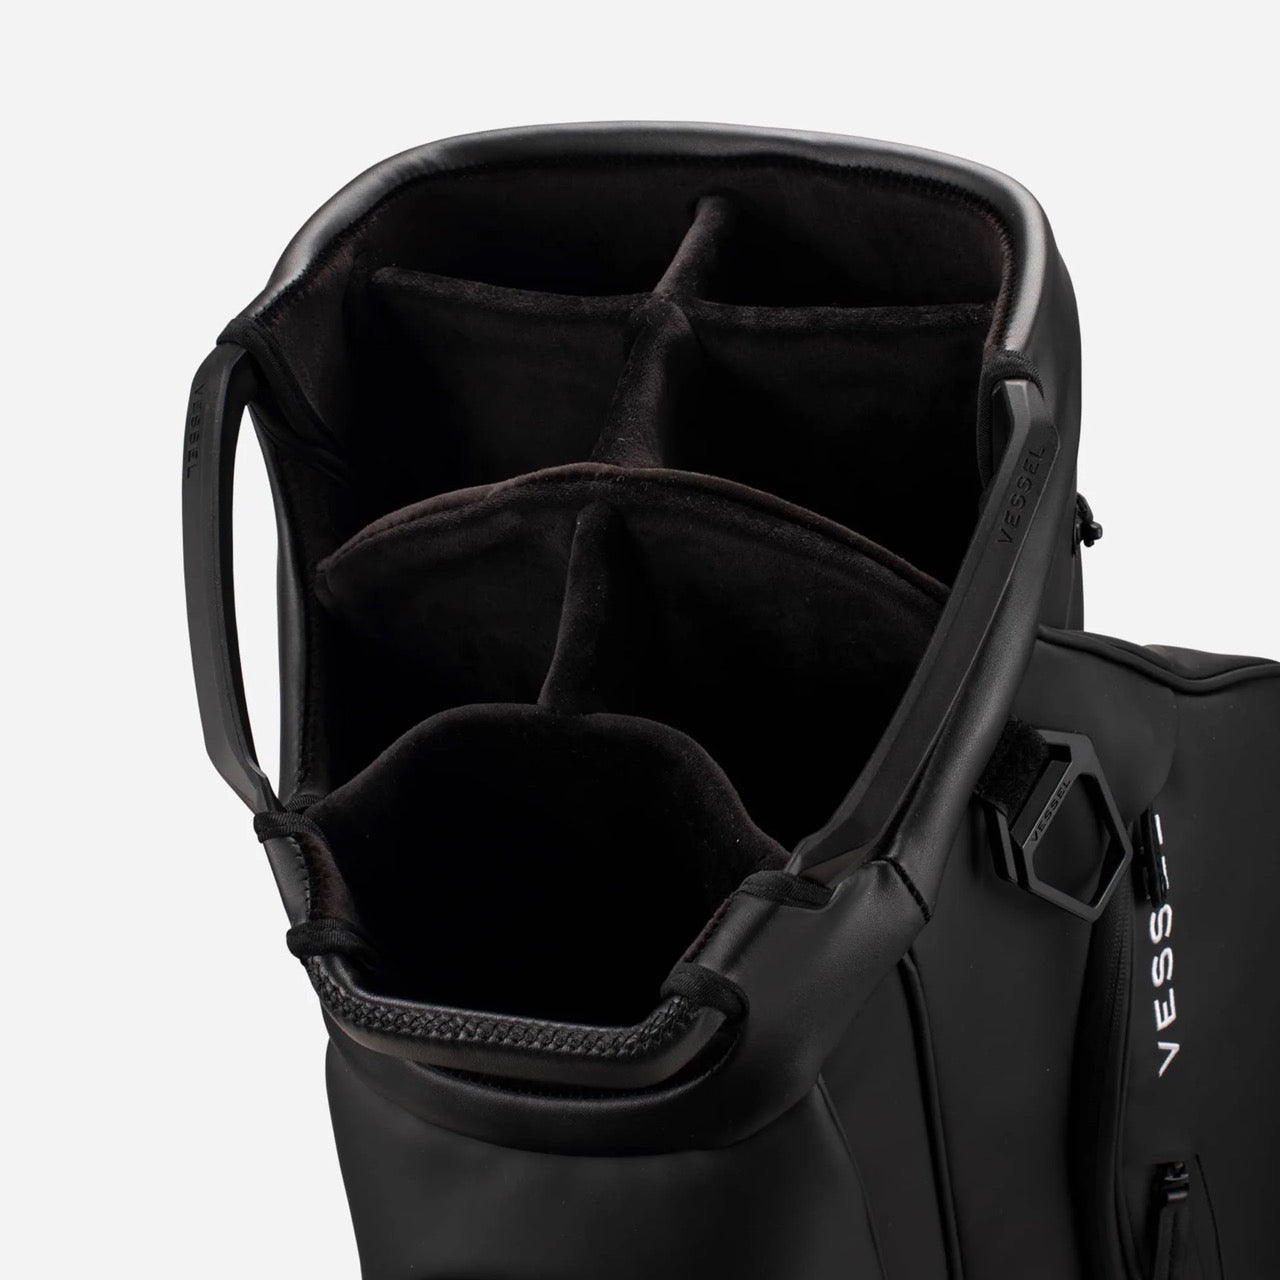 Vessel Lux 7-Way Cart Bag - Worldwide Golf Shops